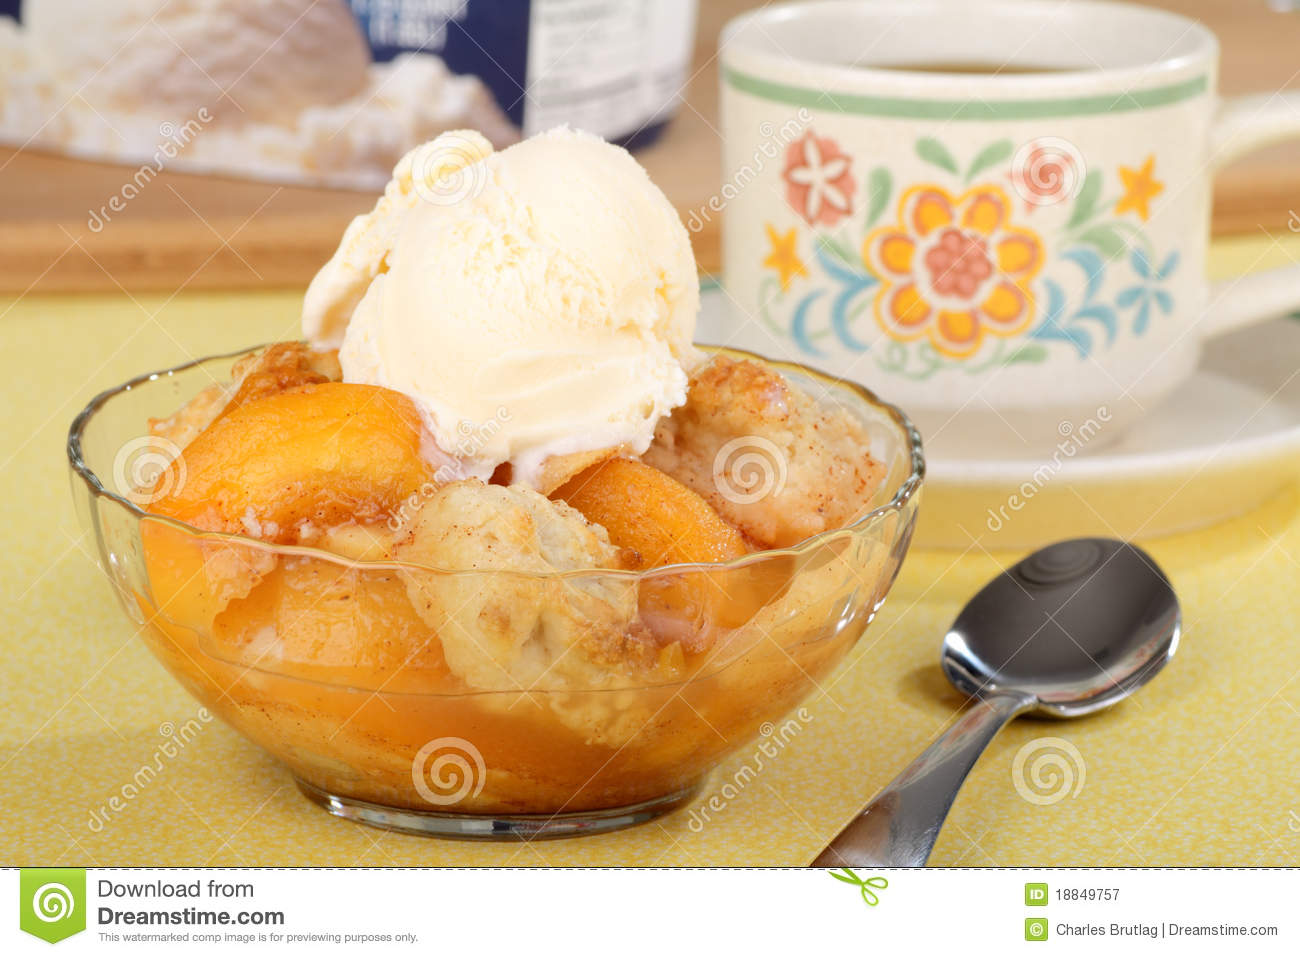 Peach Cobbler Dessert Royalty Free Stock Photography   Image  18849757